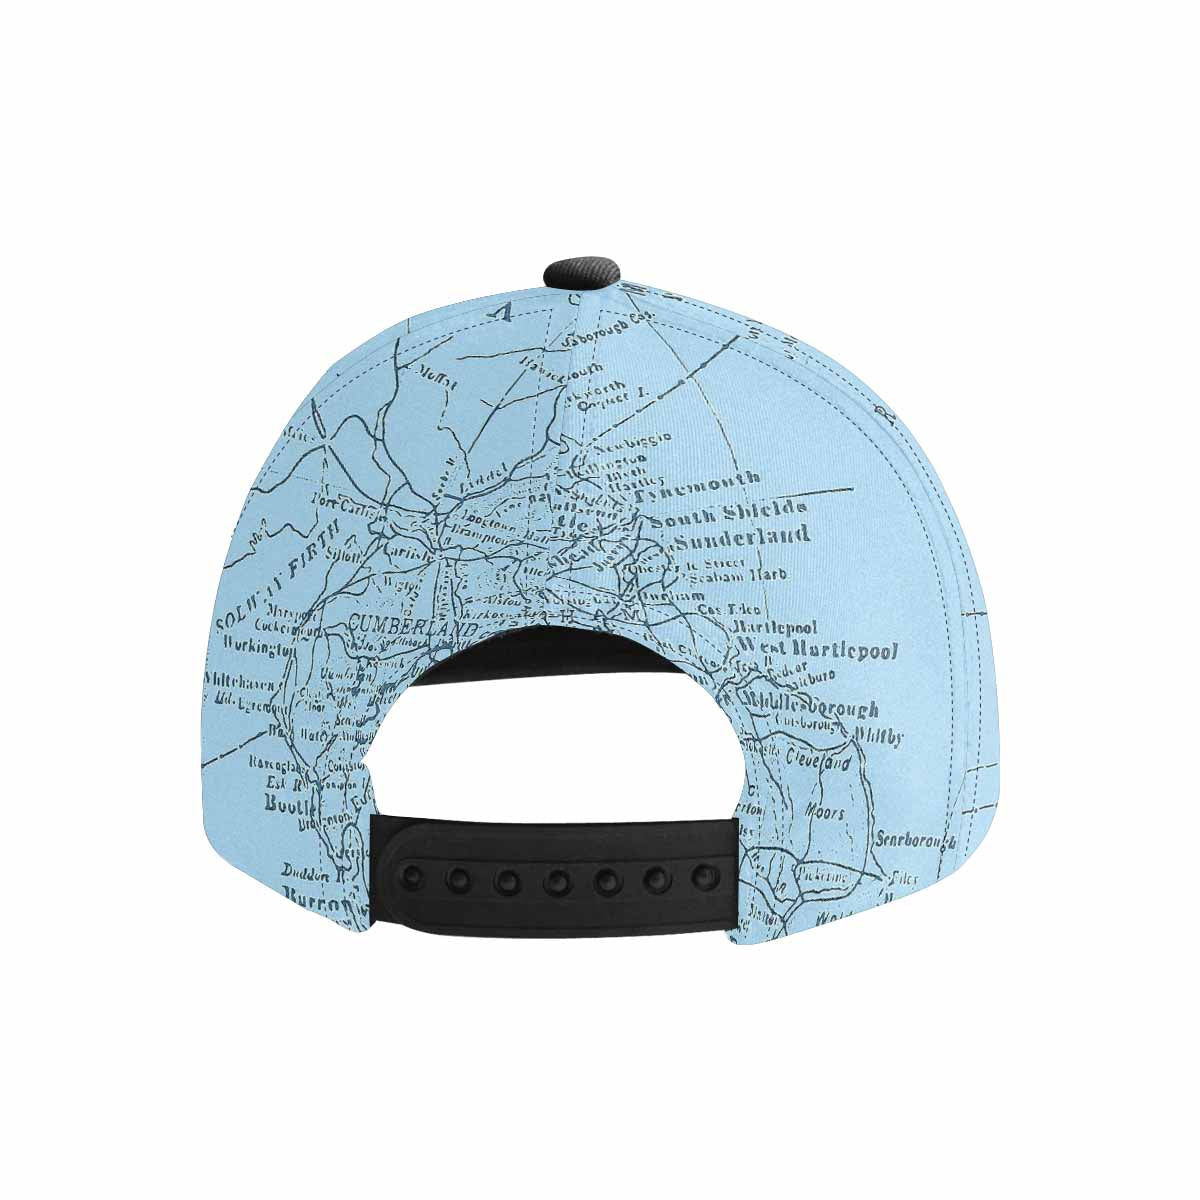 Antique Map design mens or womens deep snapback cap, trucker hat, Design 50